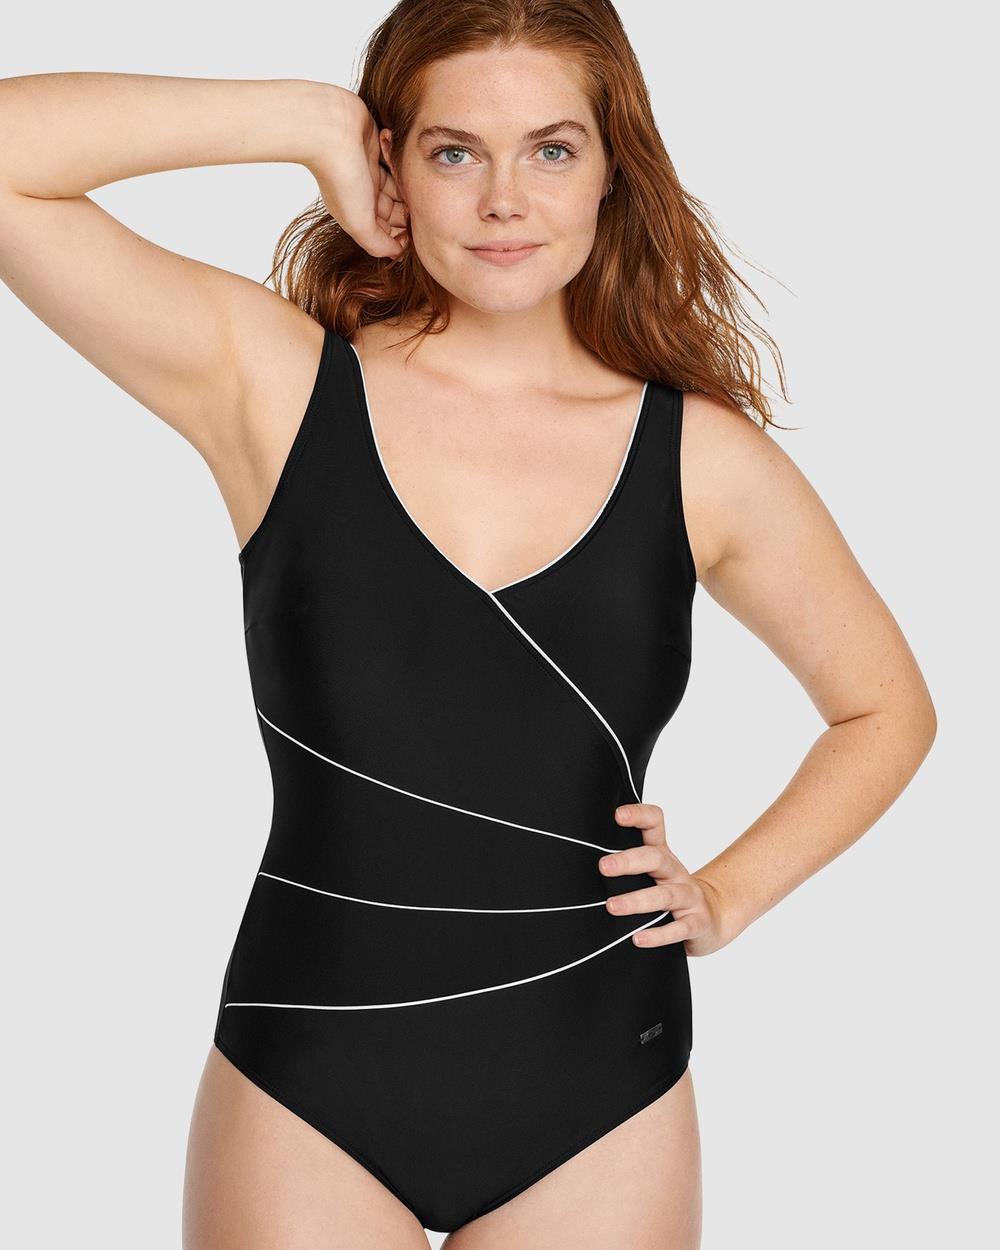 Naturana - One Piece Control Swimsuit - One-Piece / Swimsuit (Black) One Piece Control Swimsuit